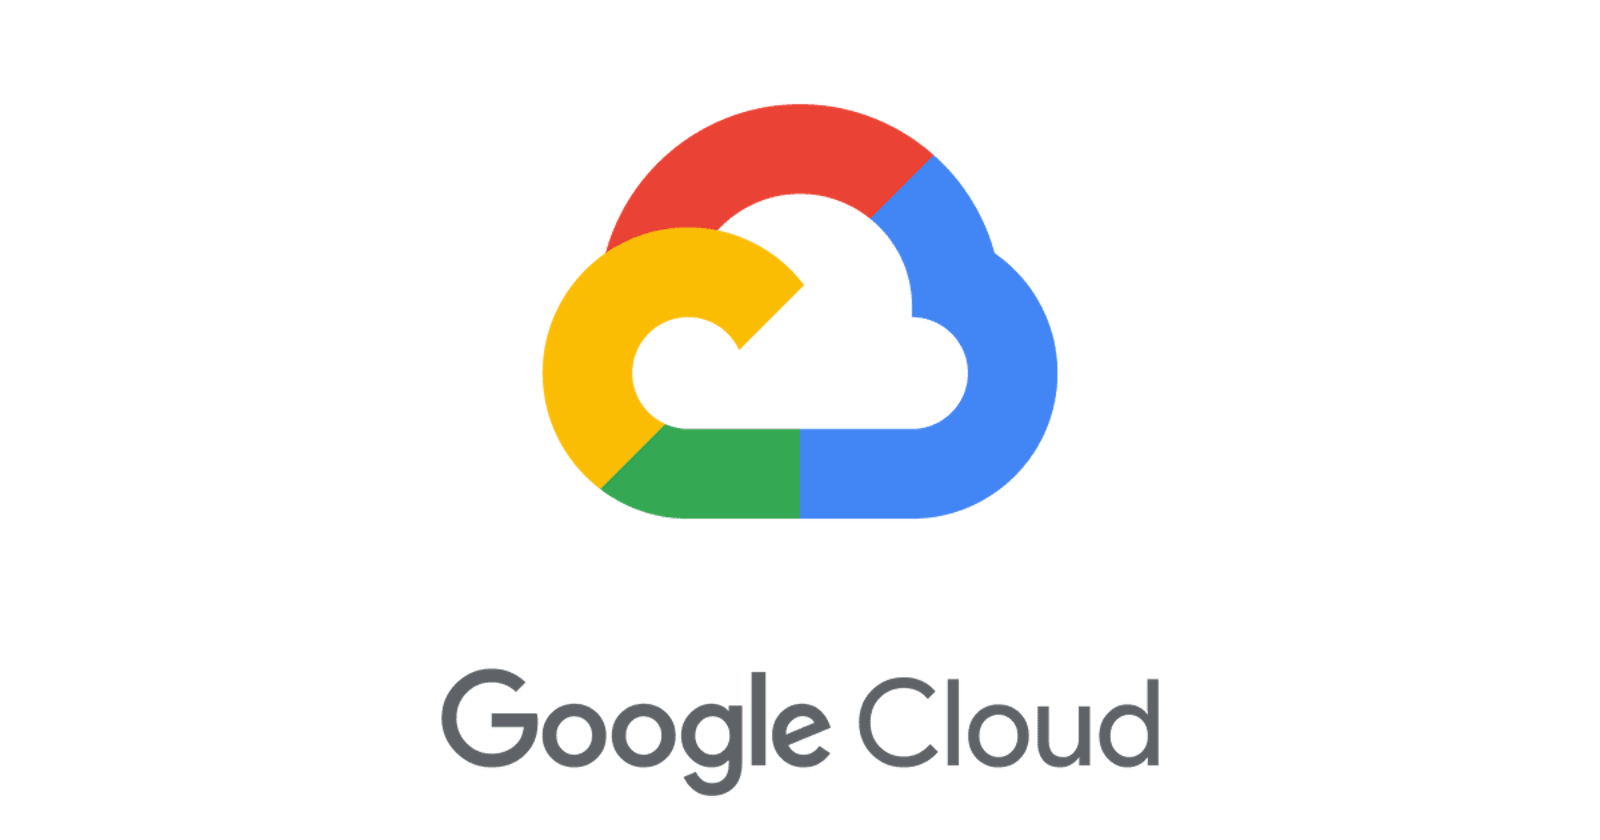 Google Cloud Platform Tutorial: From Zero to Hero with GCP